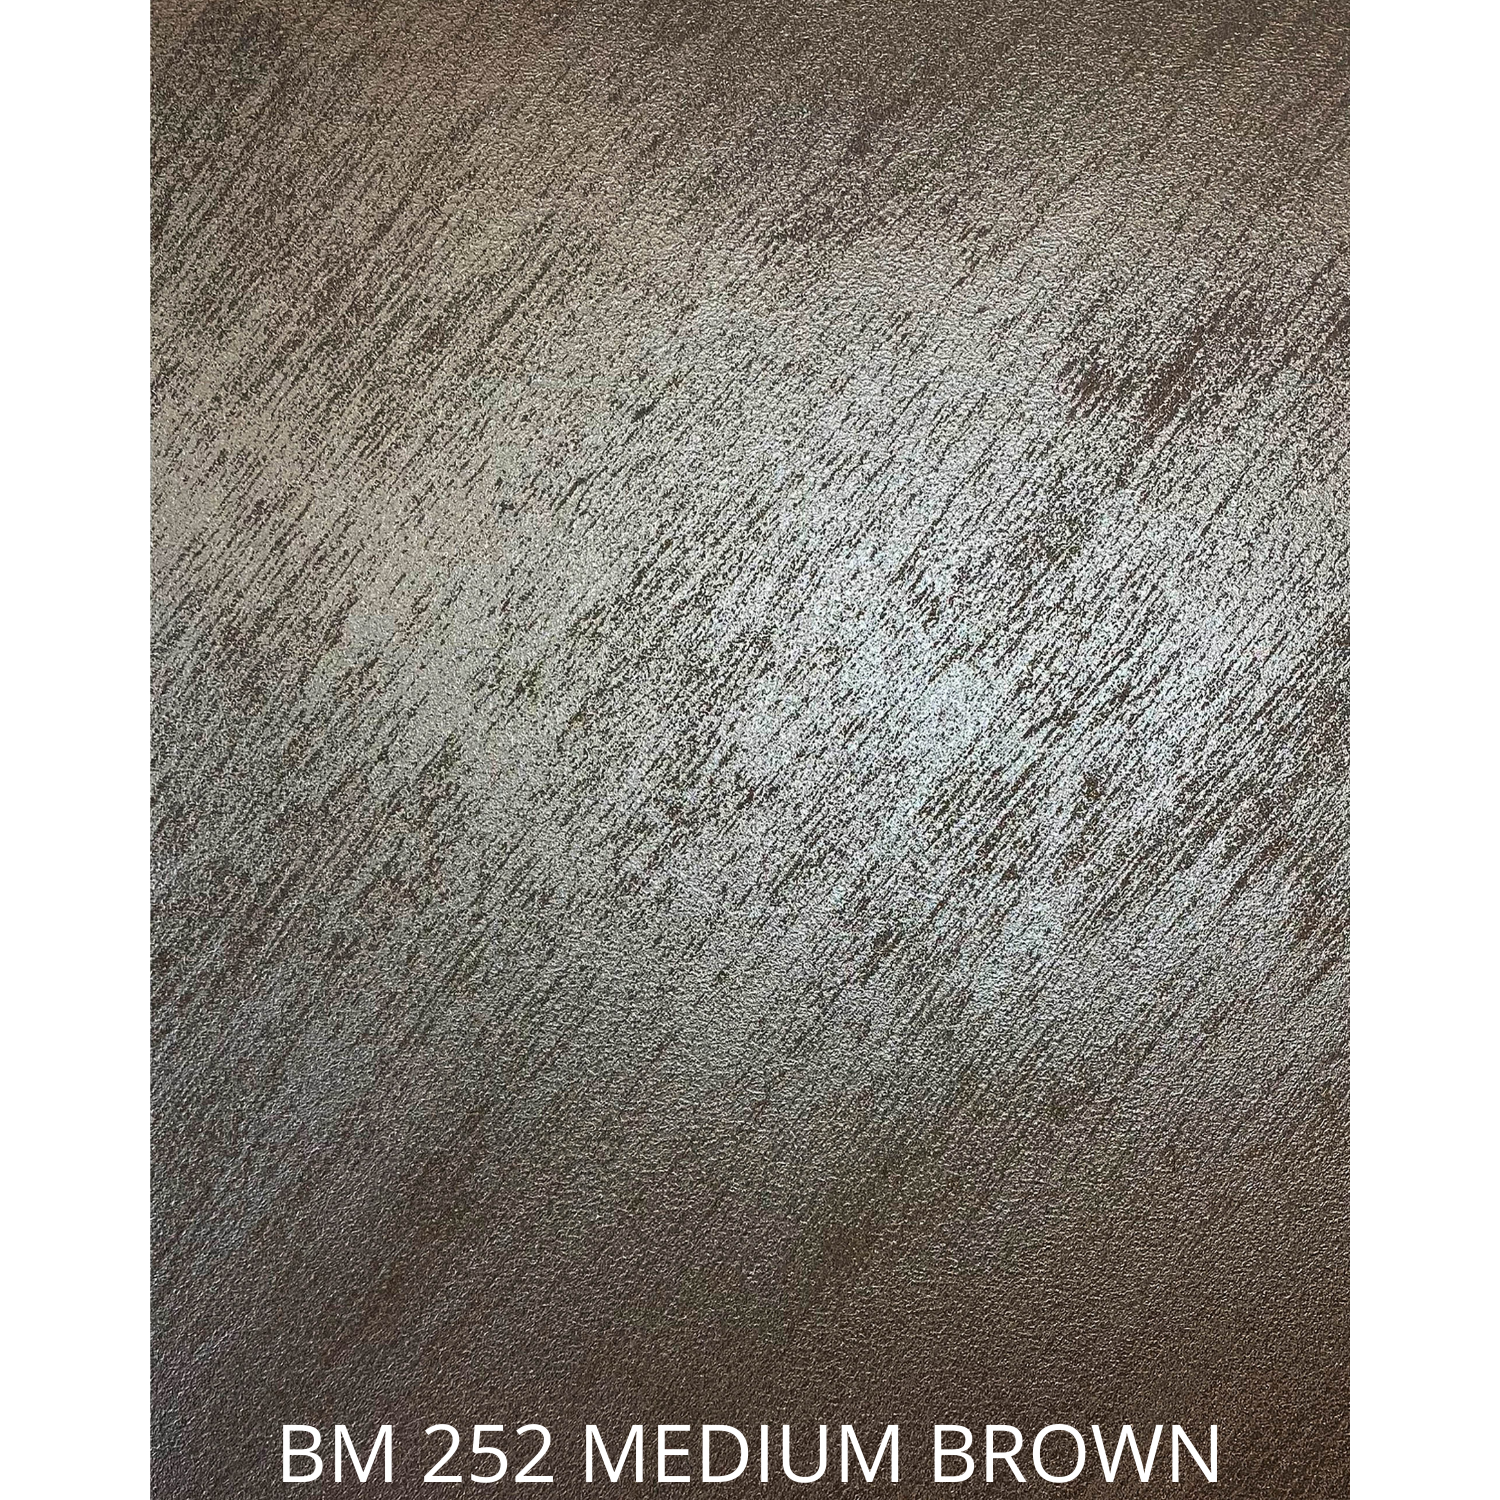 BM 252 MEDIUM BROWN